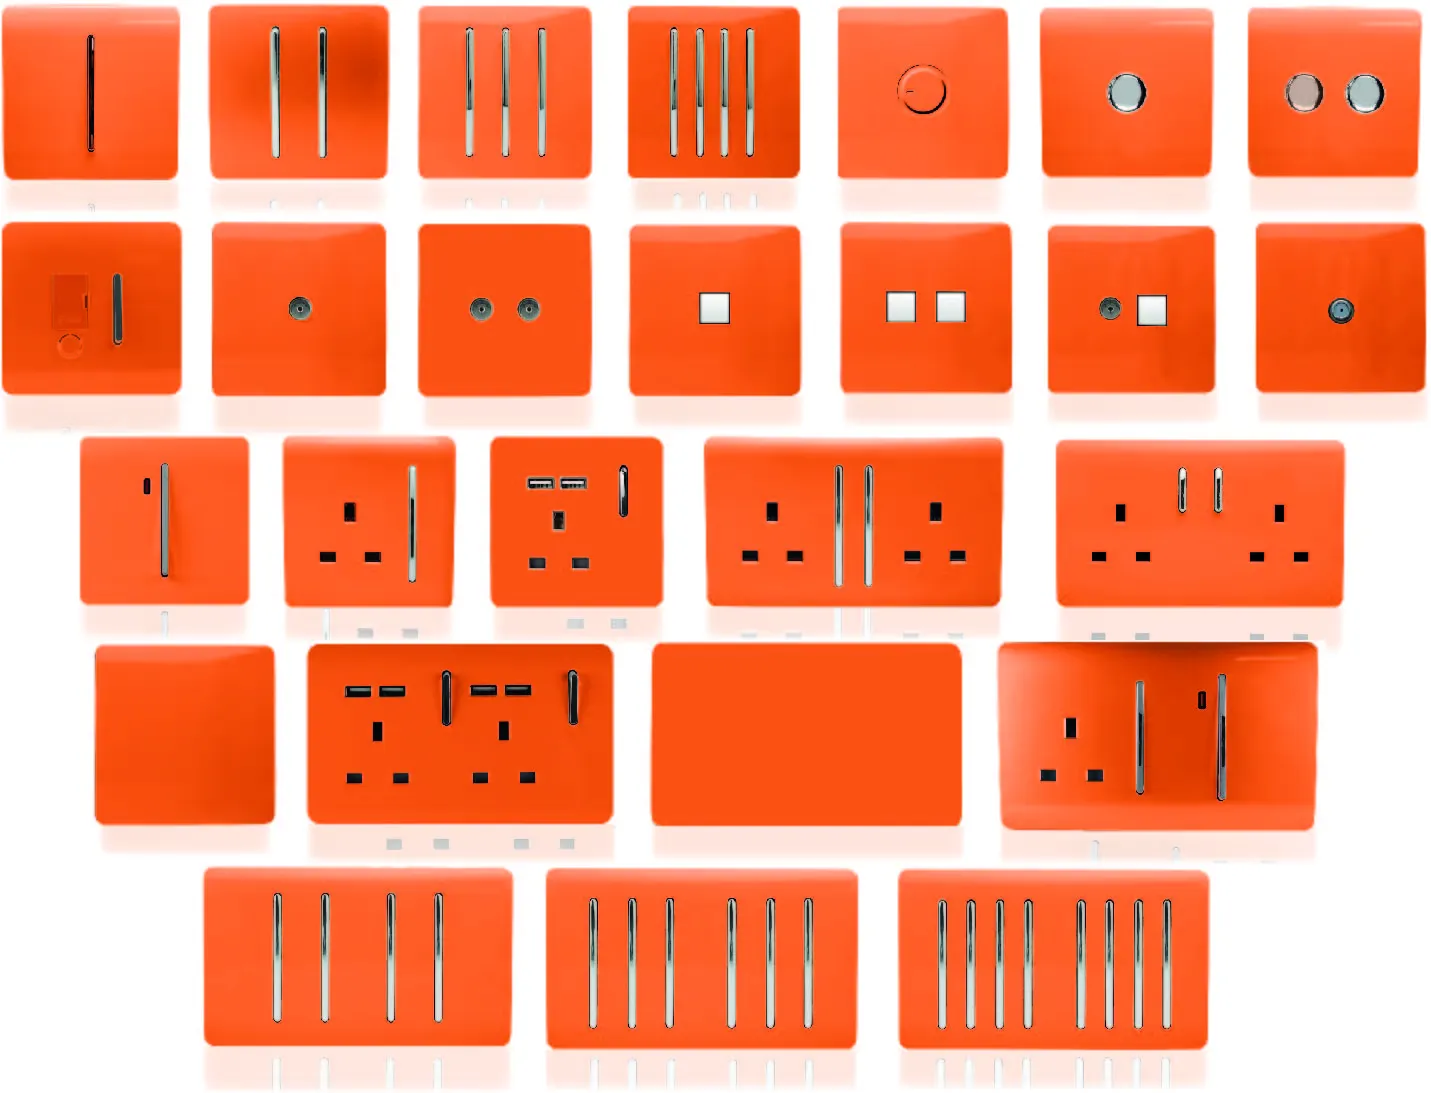 20 Amp Neon Insert Double Pole Switch Orange ART-WHS1OR  Trendi Orange